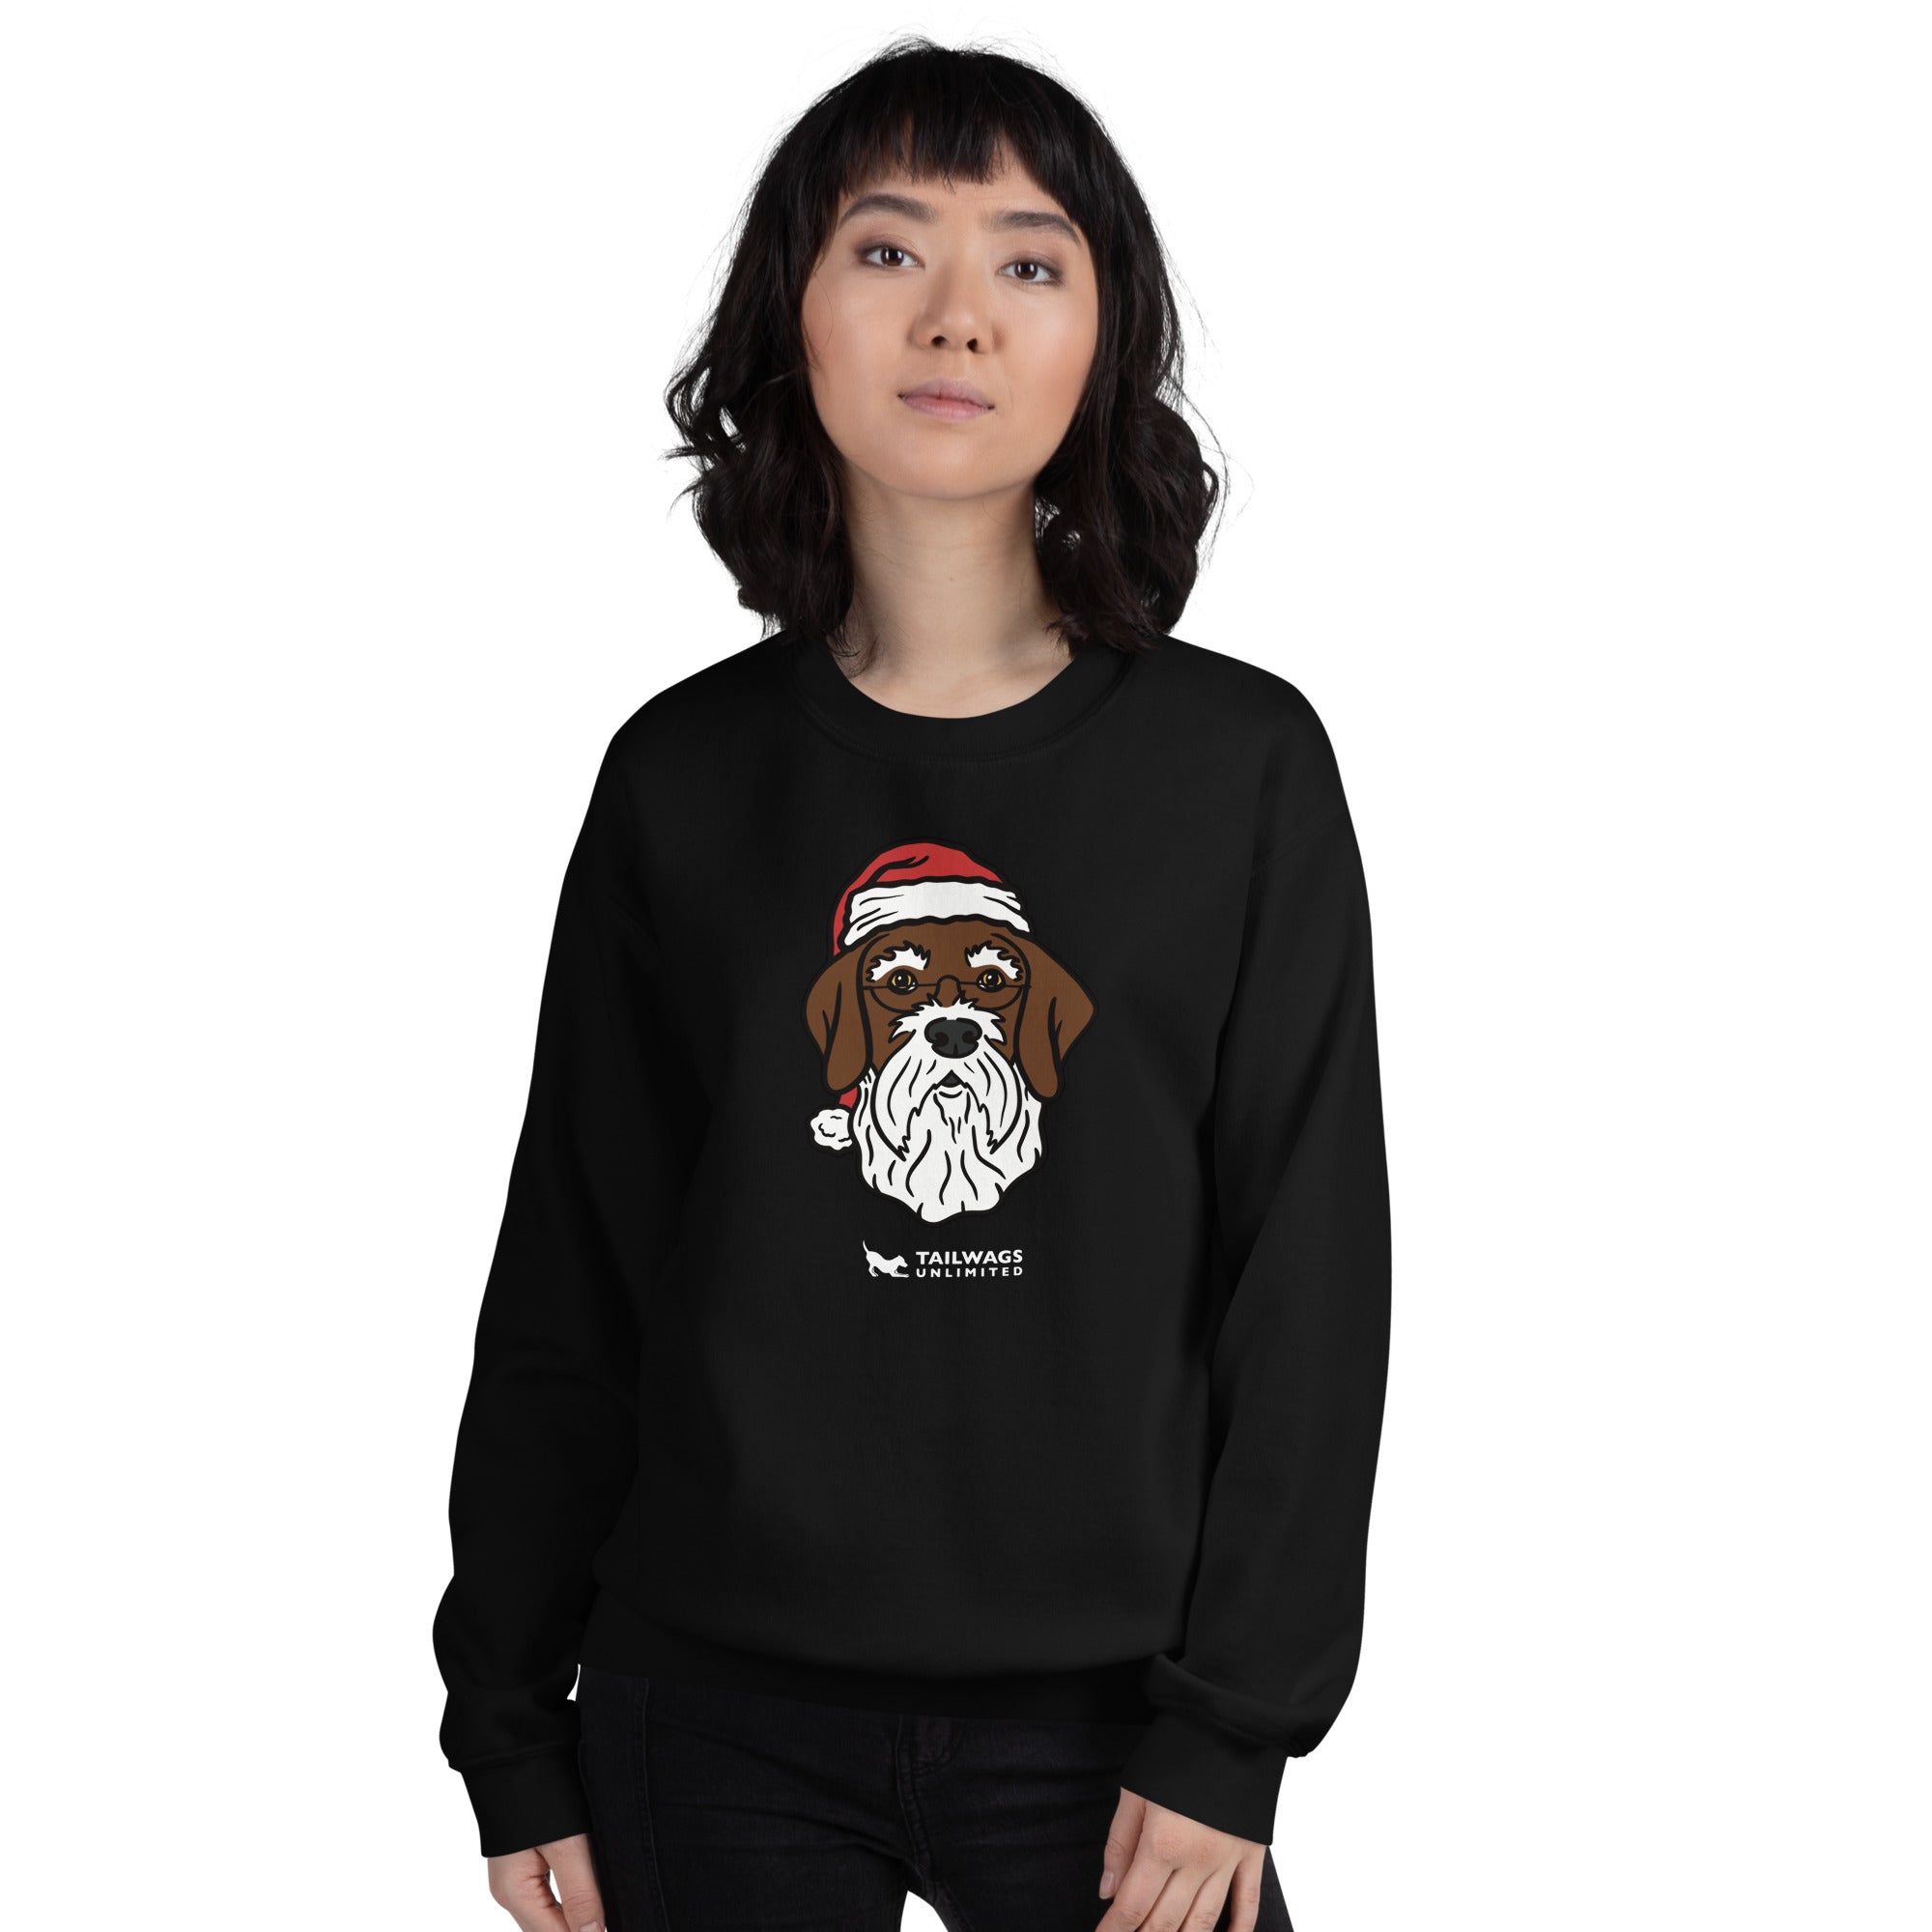 Santa Paws Crewneck Sweatshirt - TAILWAGS UNLIMITED